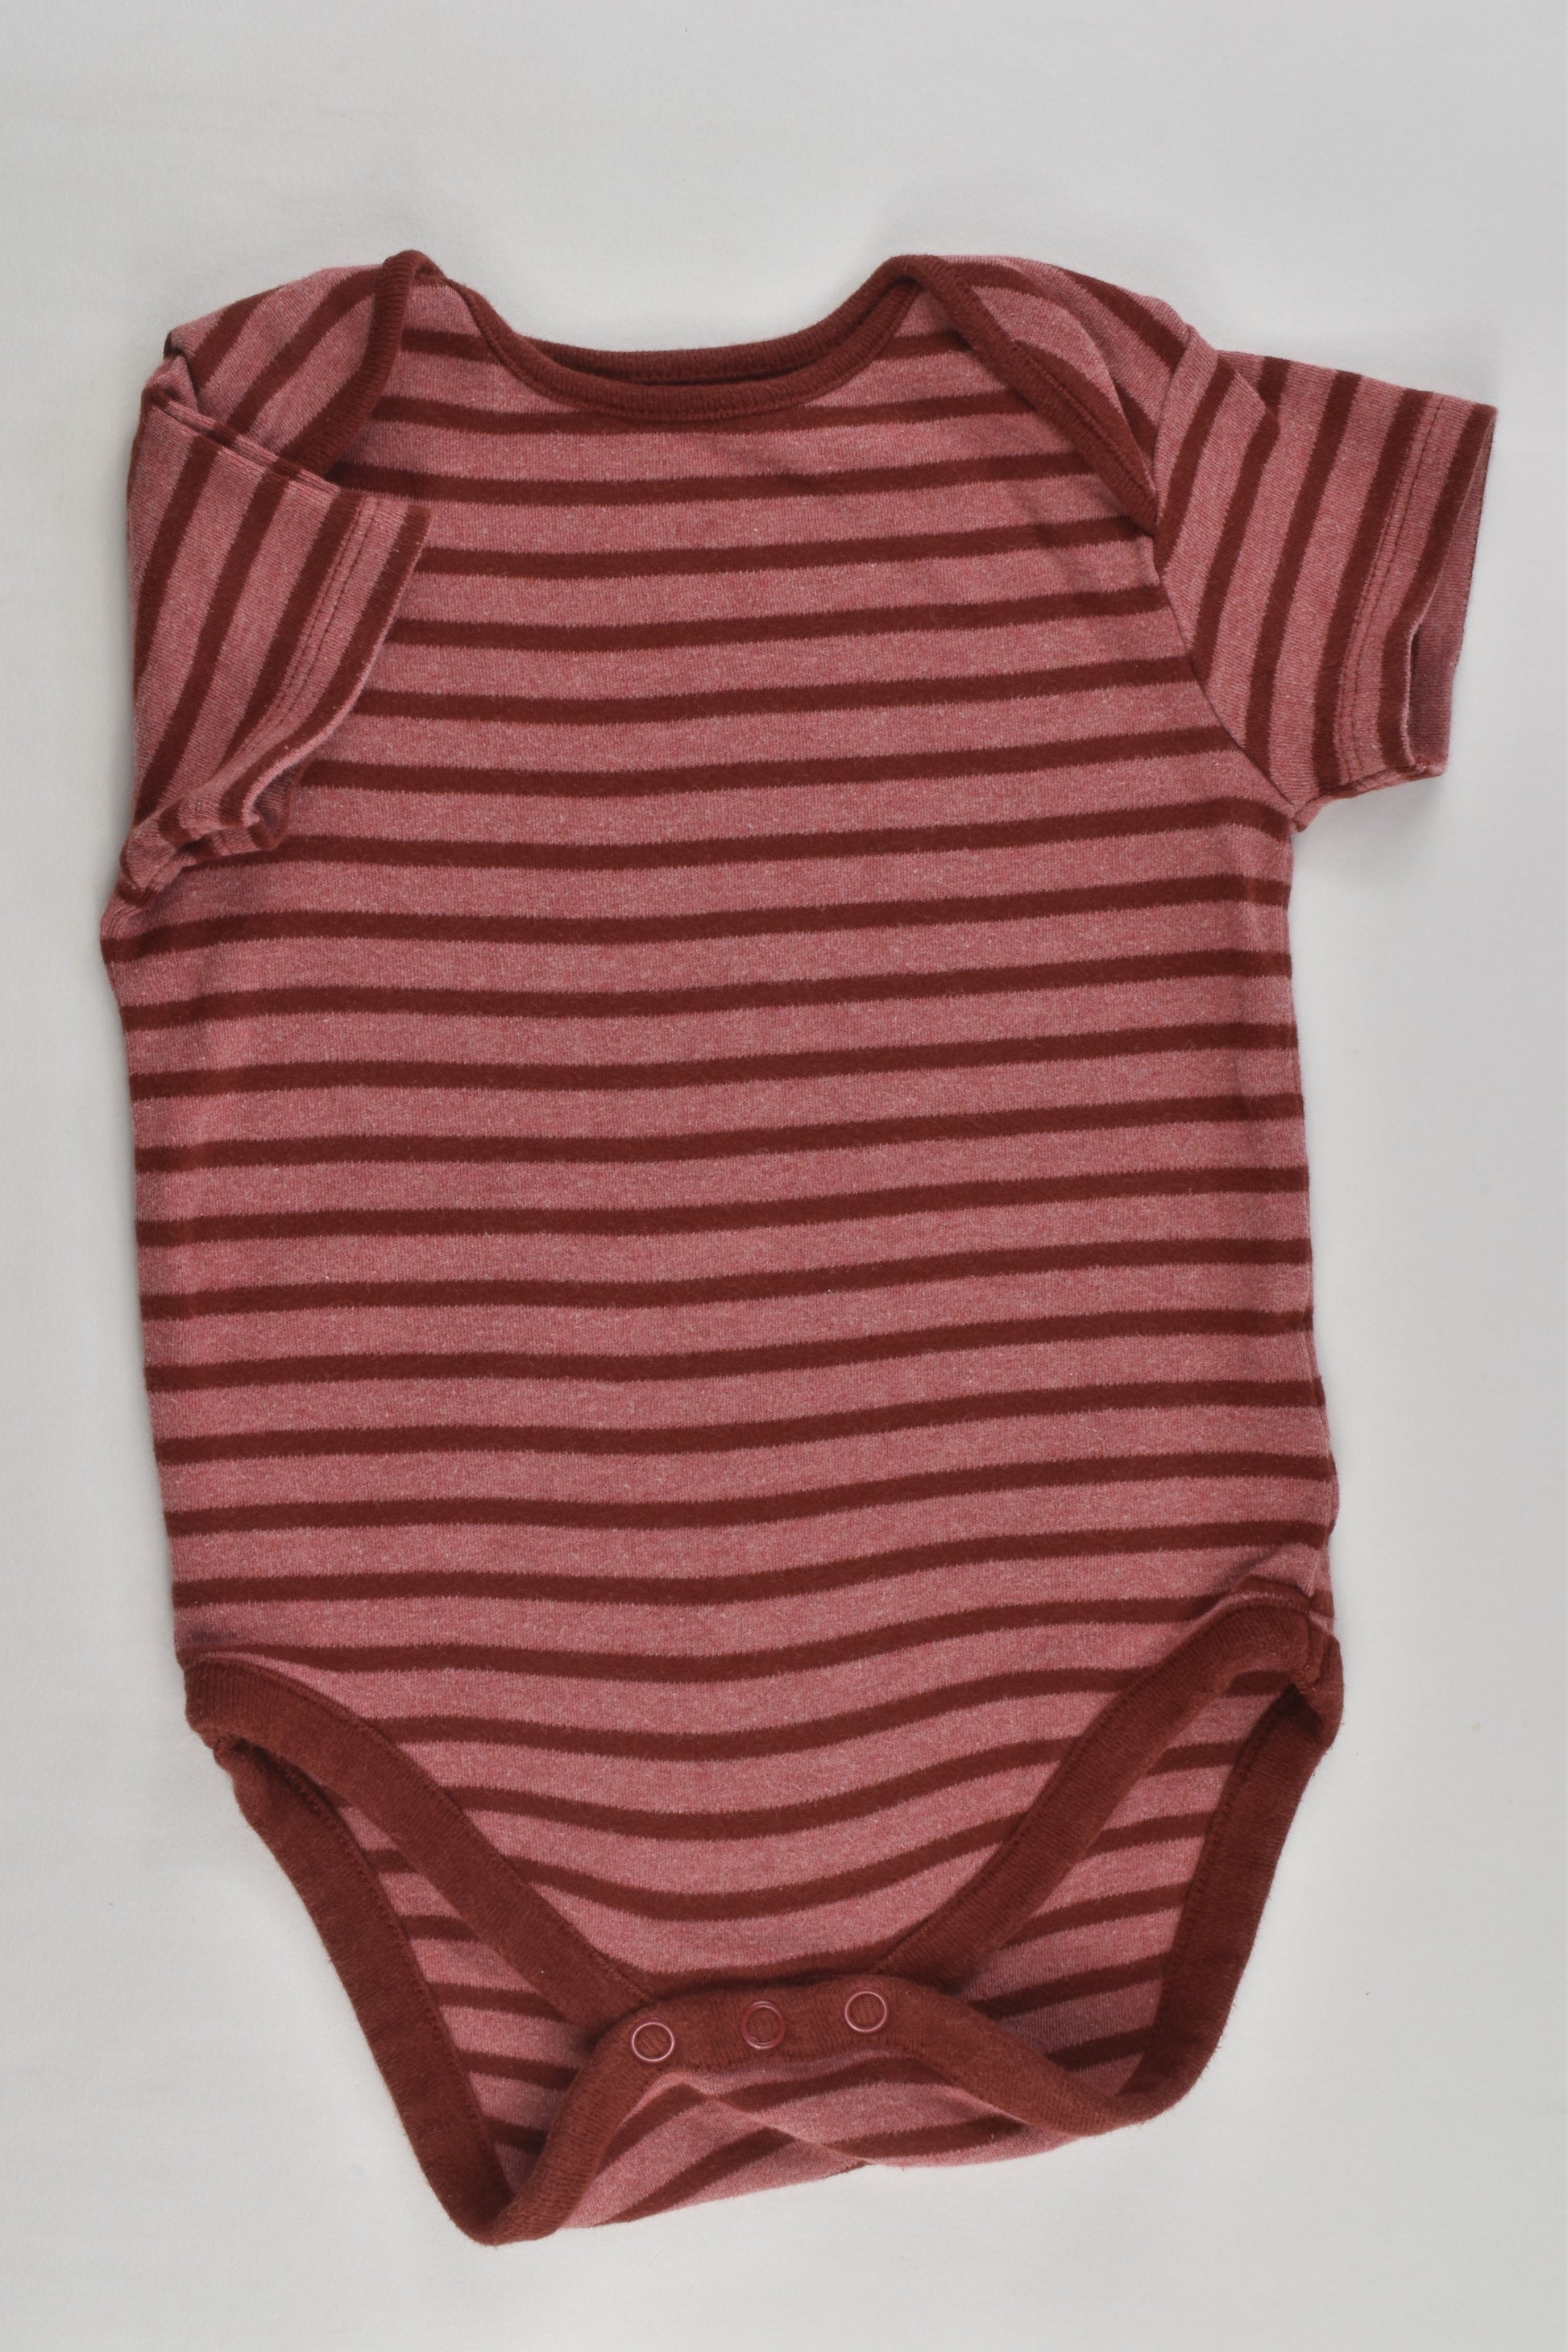 Next Size 0 (9-12 months) Striped Bodysuit